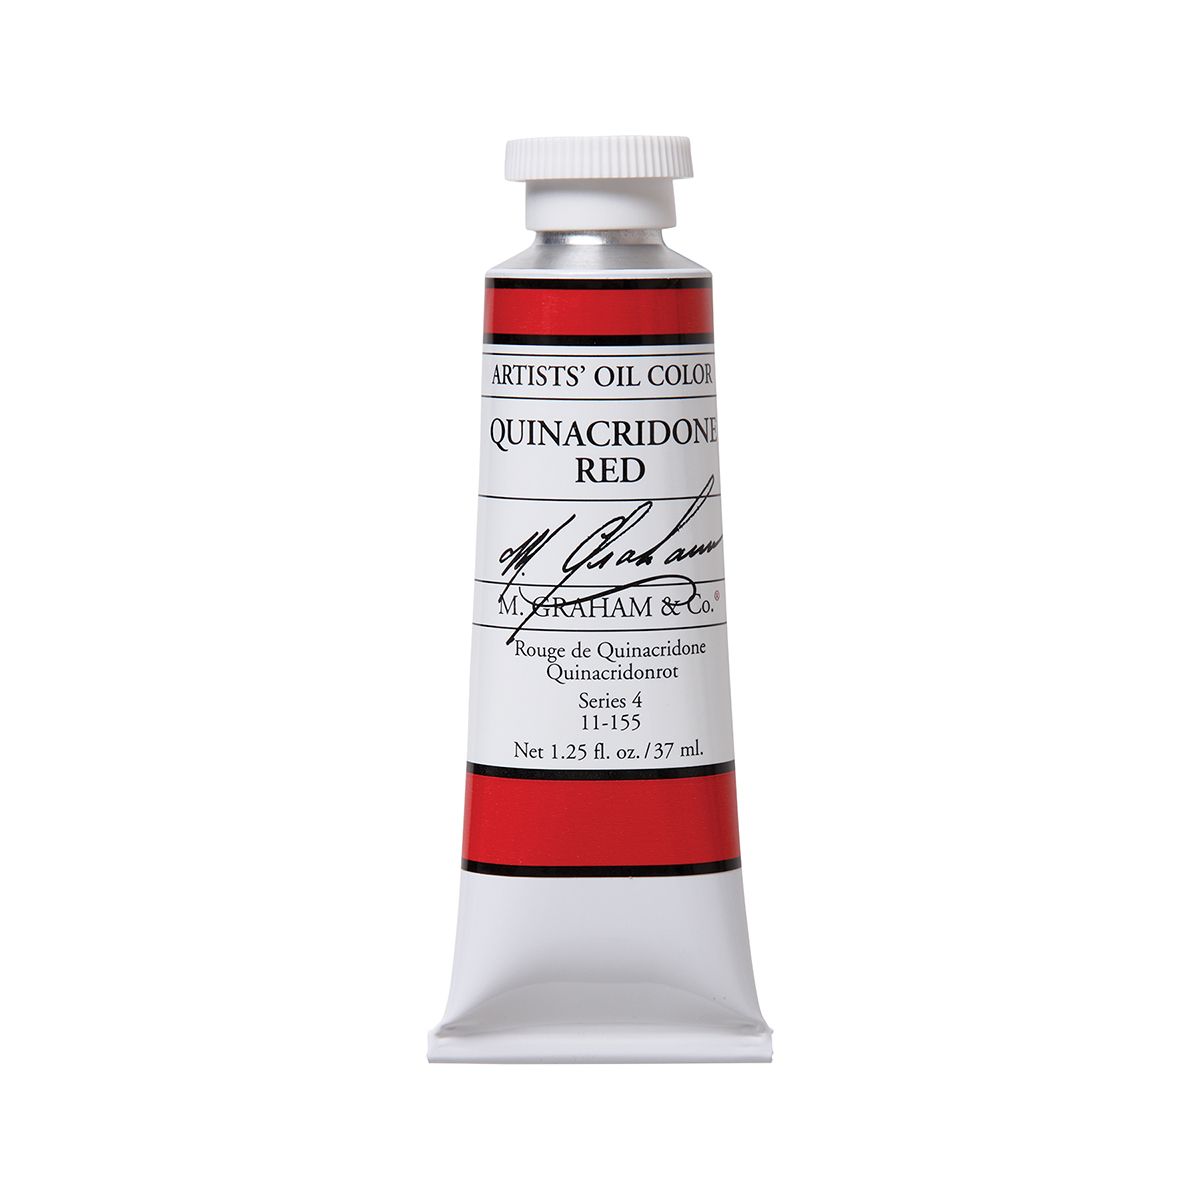 M Graham Oil Paint - Quinacridone Red 37 ml